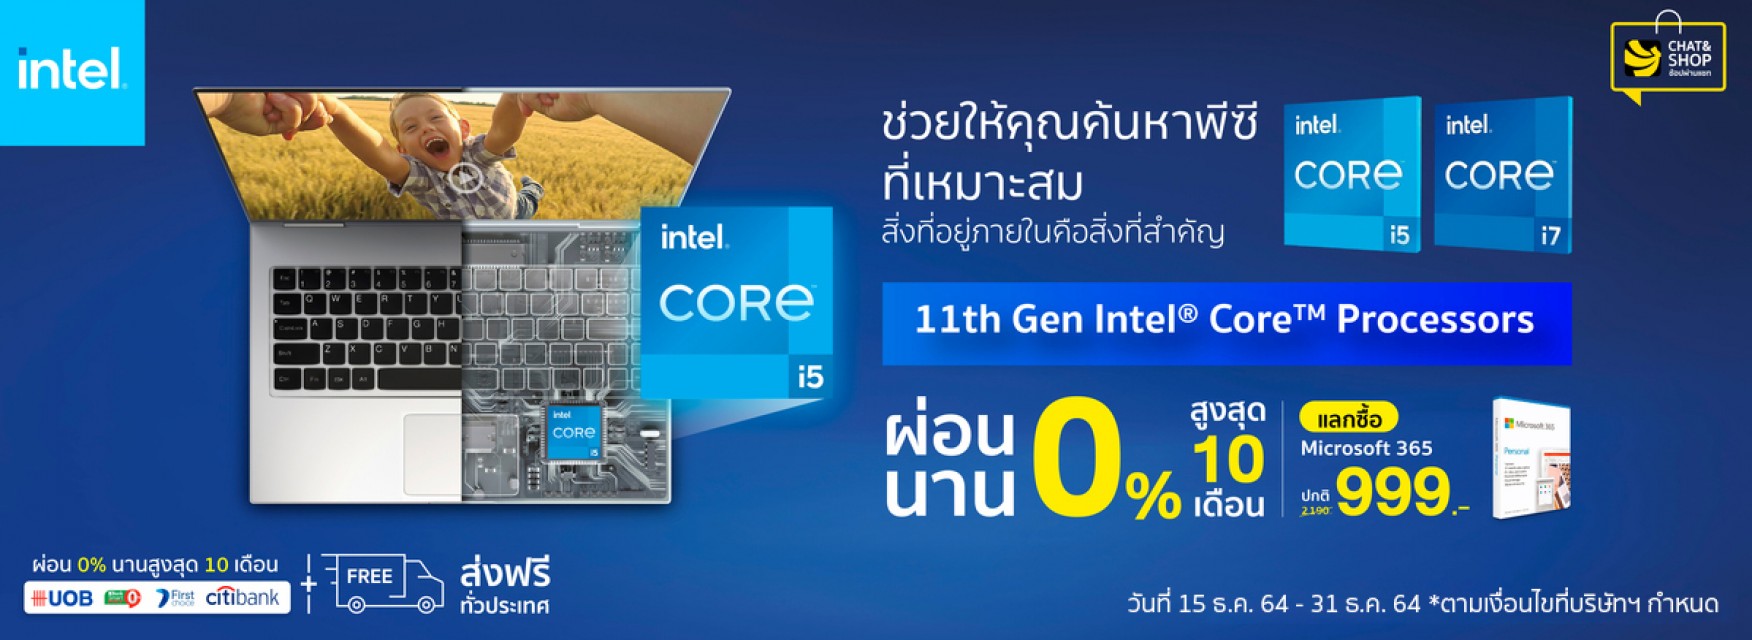 Intel 11th Gen เพื่อการทำงานร่วมกันที่ดีที่สุด